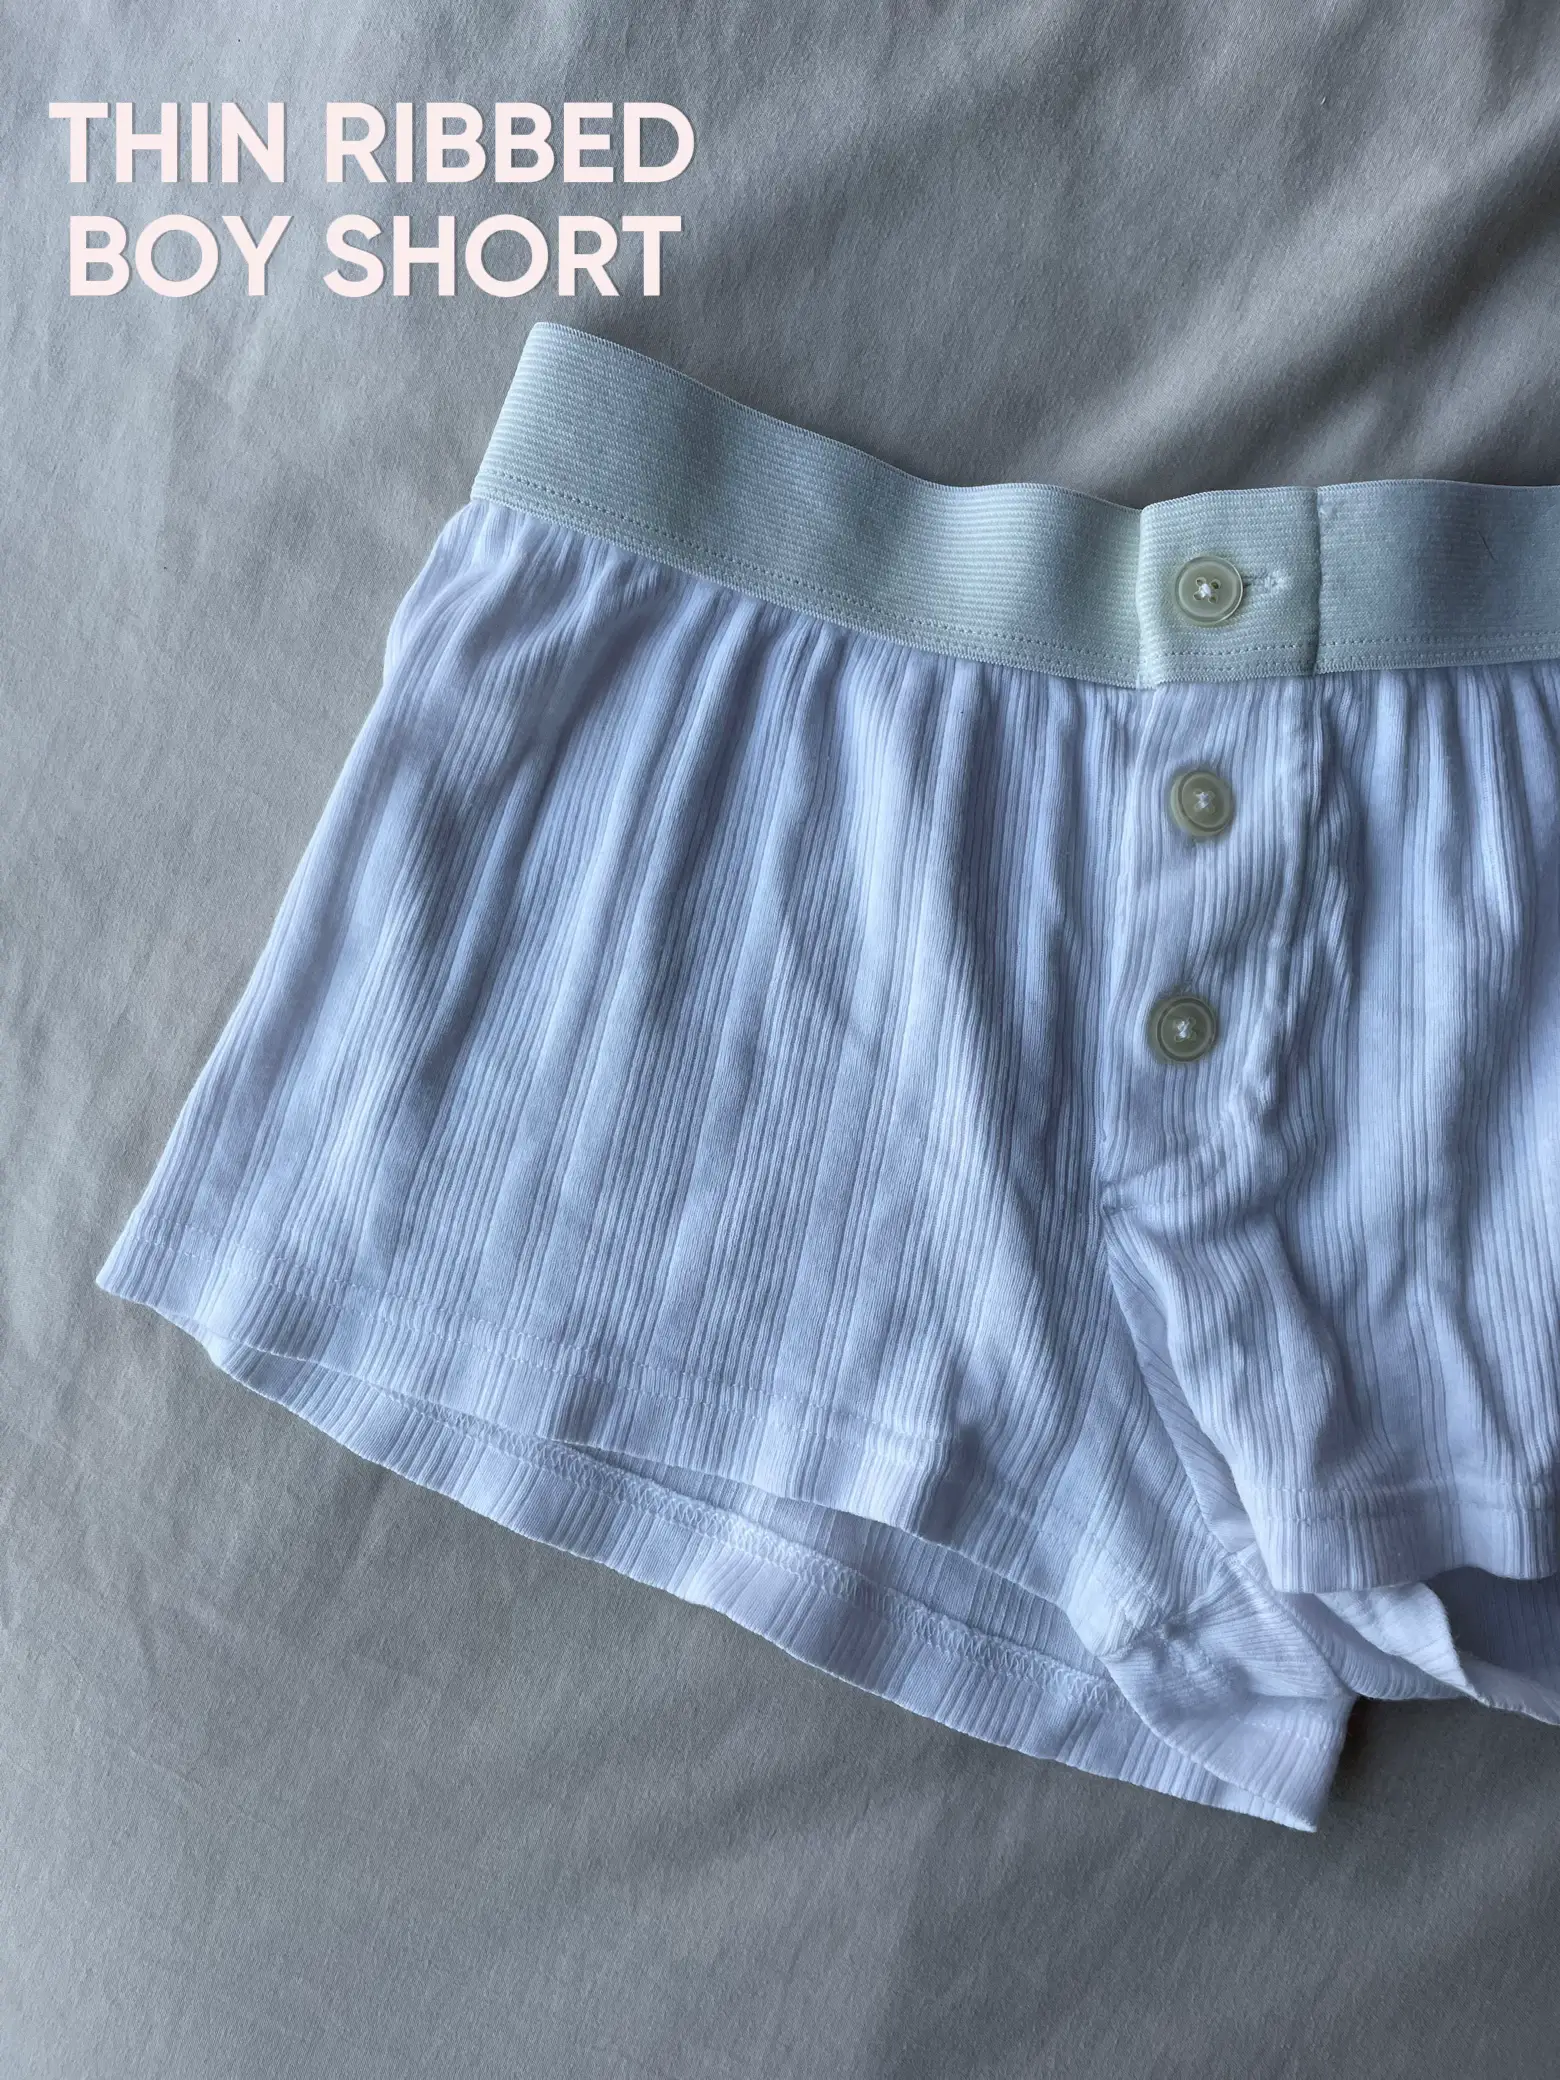 Brandy Melville Boy Short Thick Ribbed Underwear